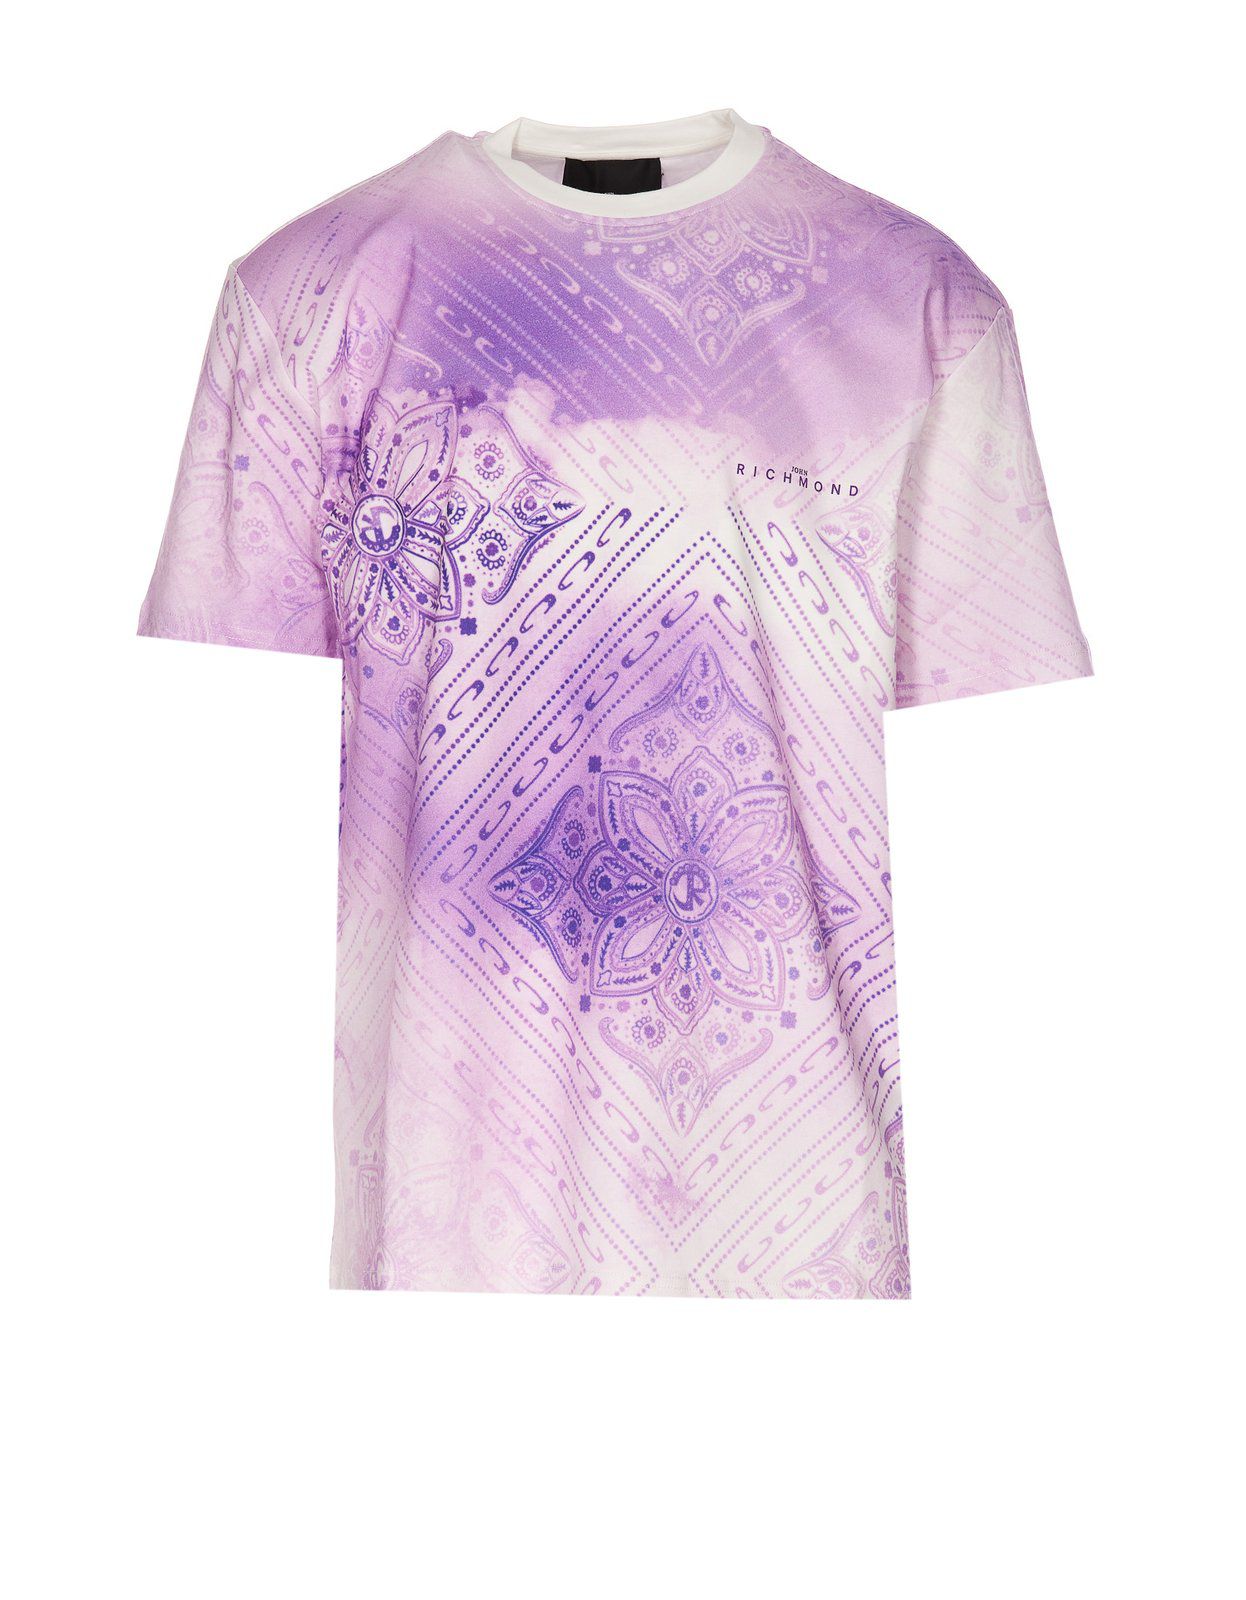 John Richmond T-Shirt Over Abakai Bandana Purple - AL Capone PremiumClothingT-Shirts456-11